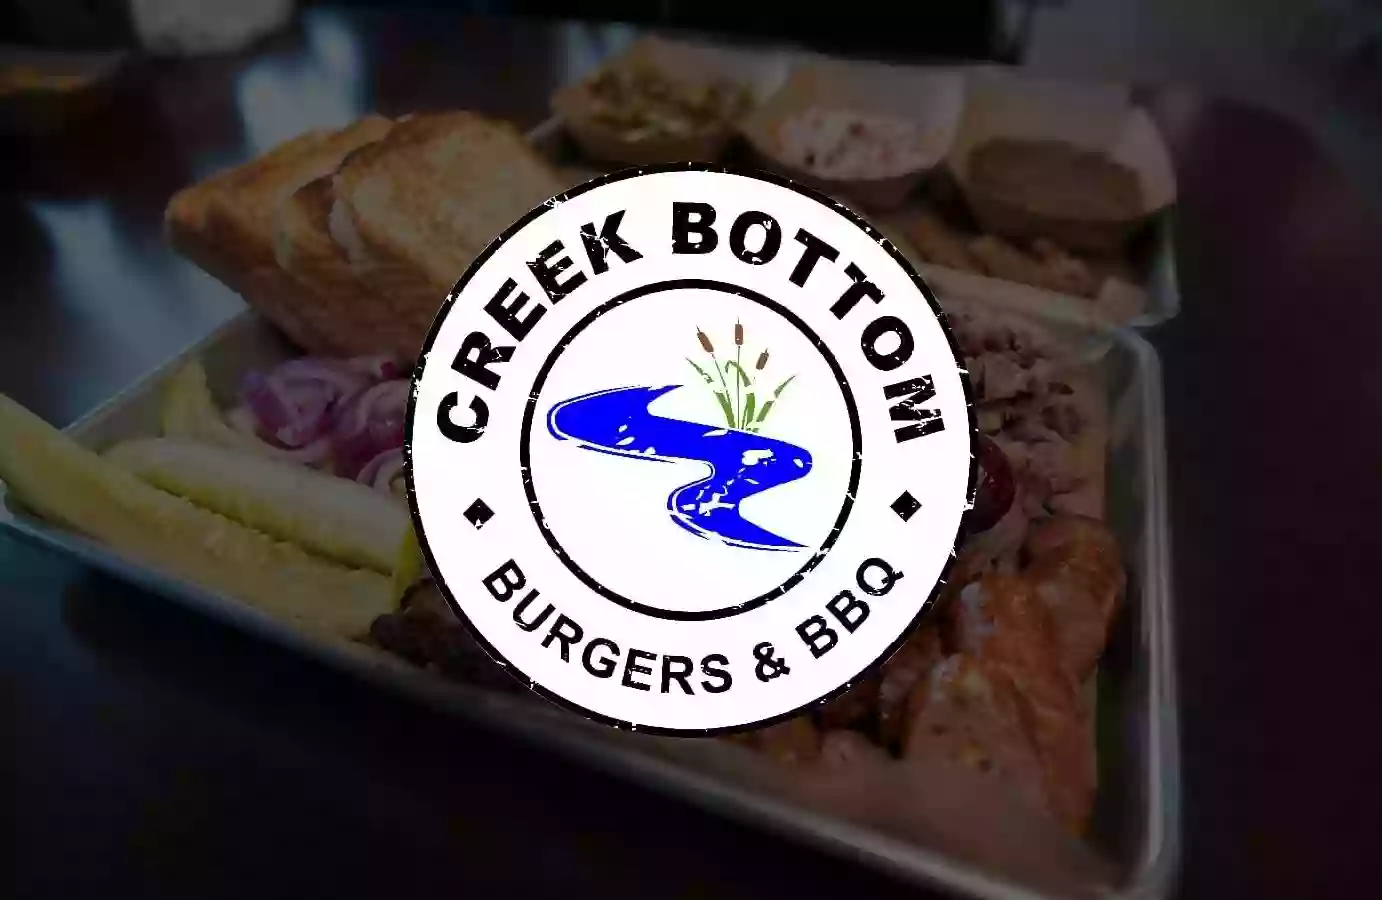 Creek Bottom Burgers & BBQ